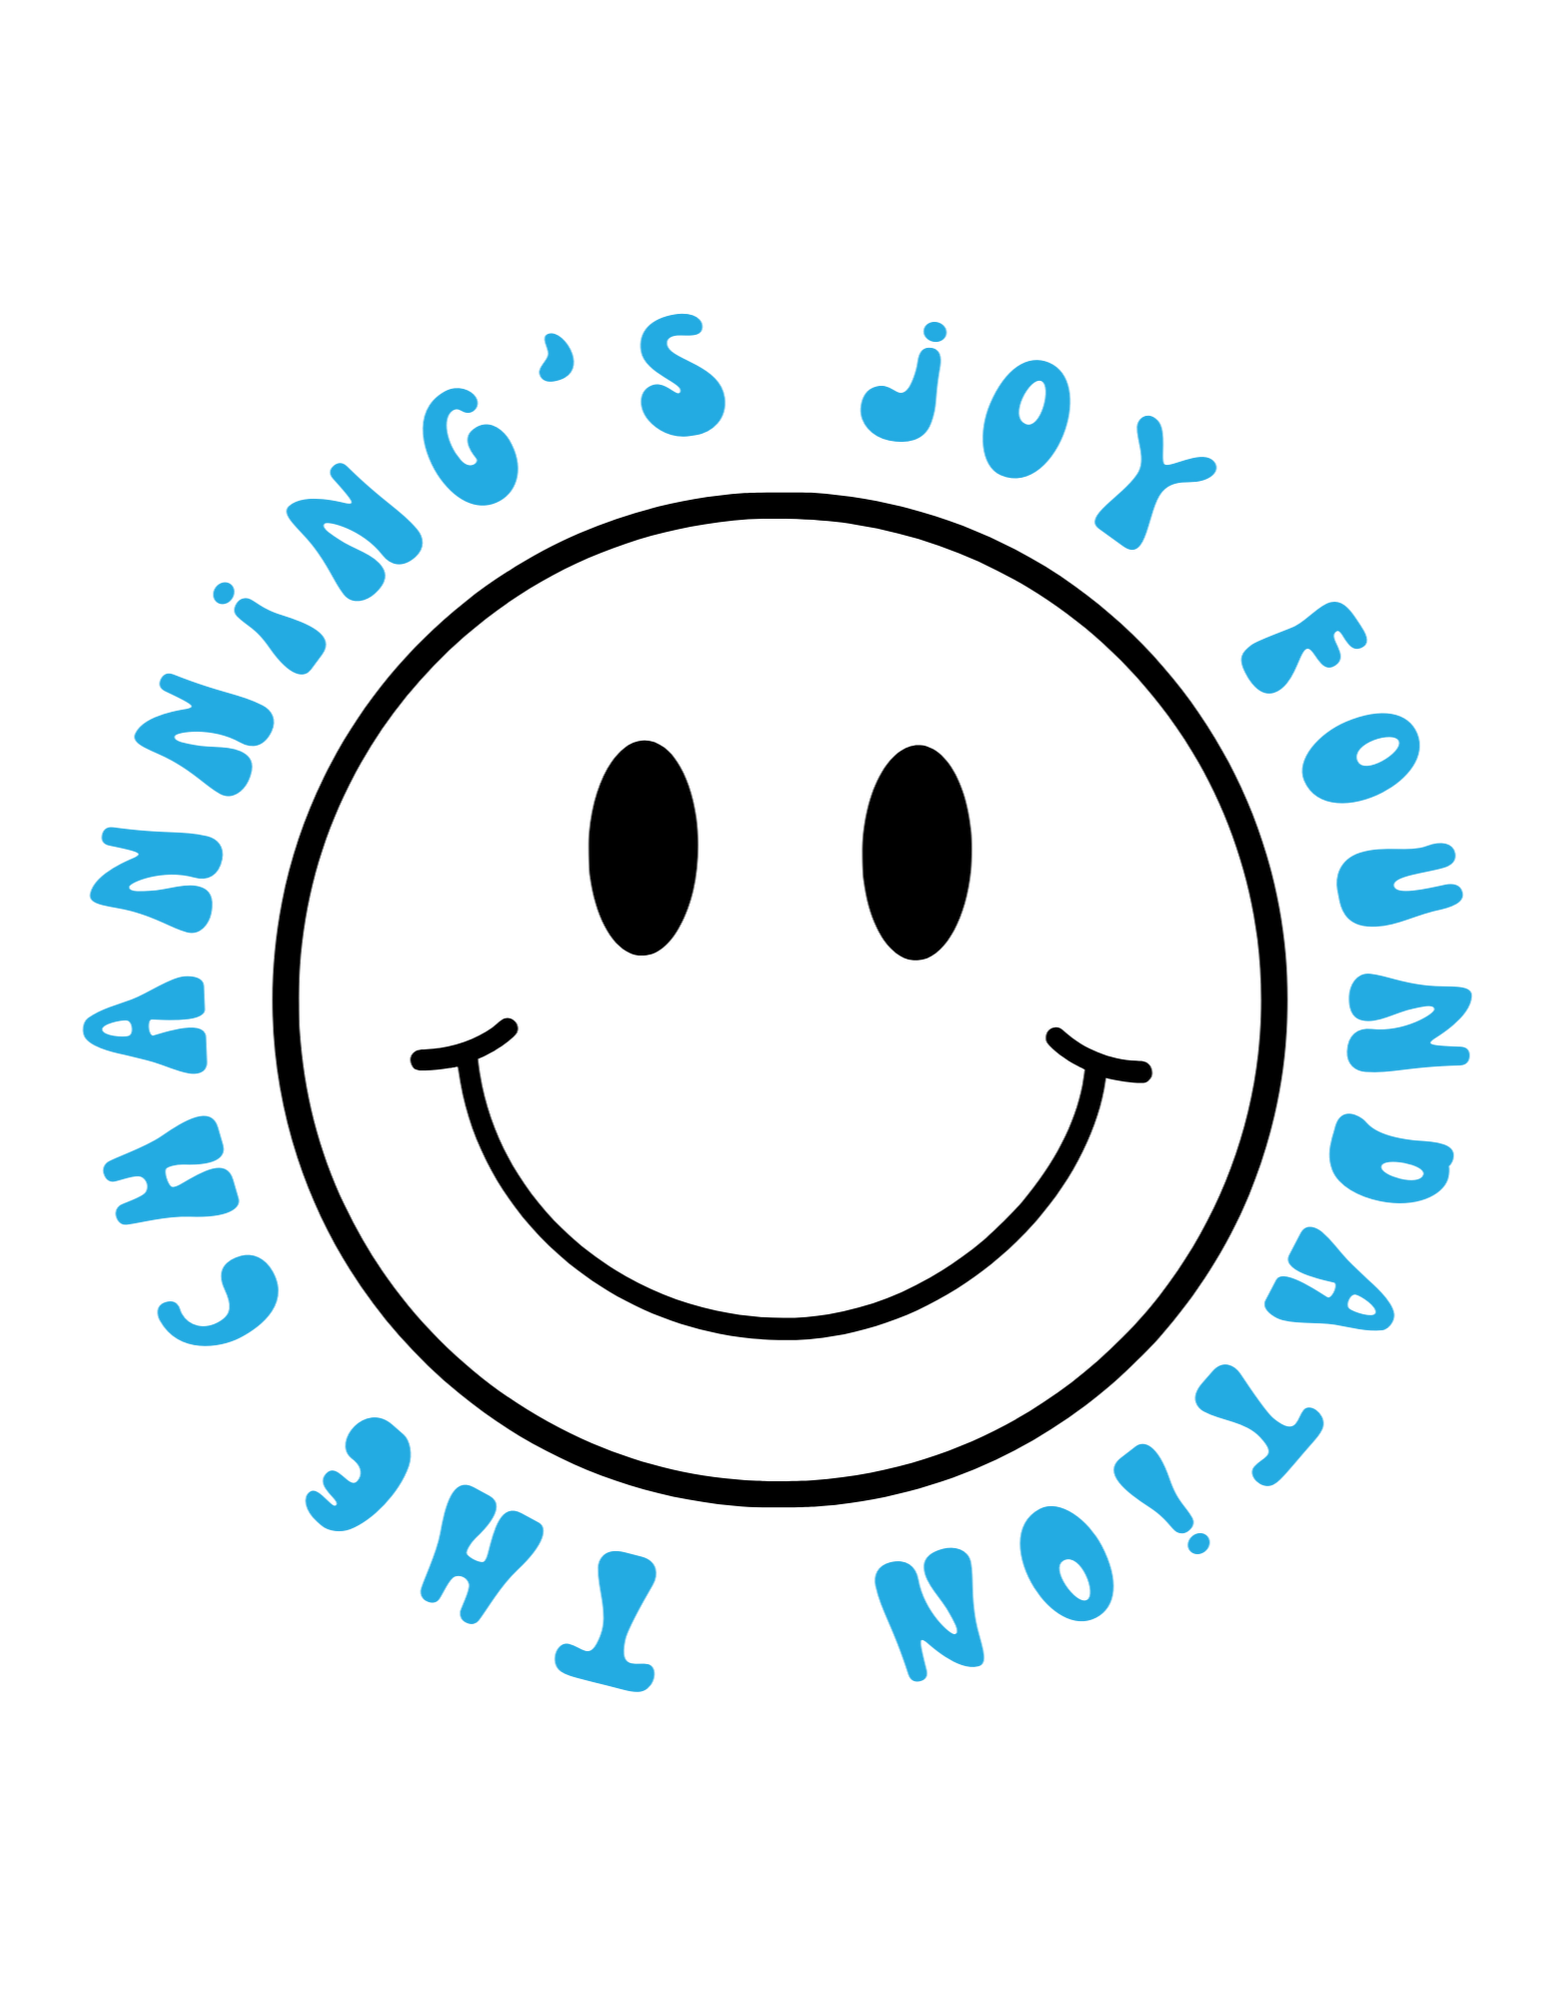 The Channing's Joy Foundation logo